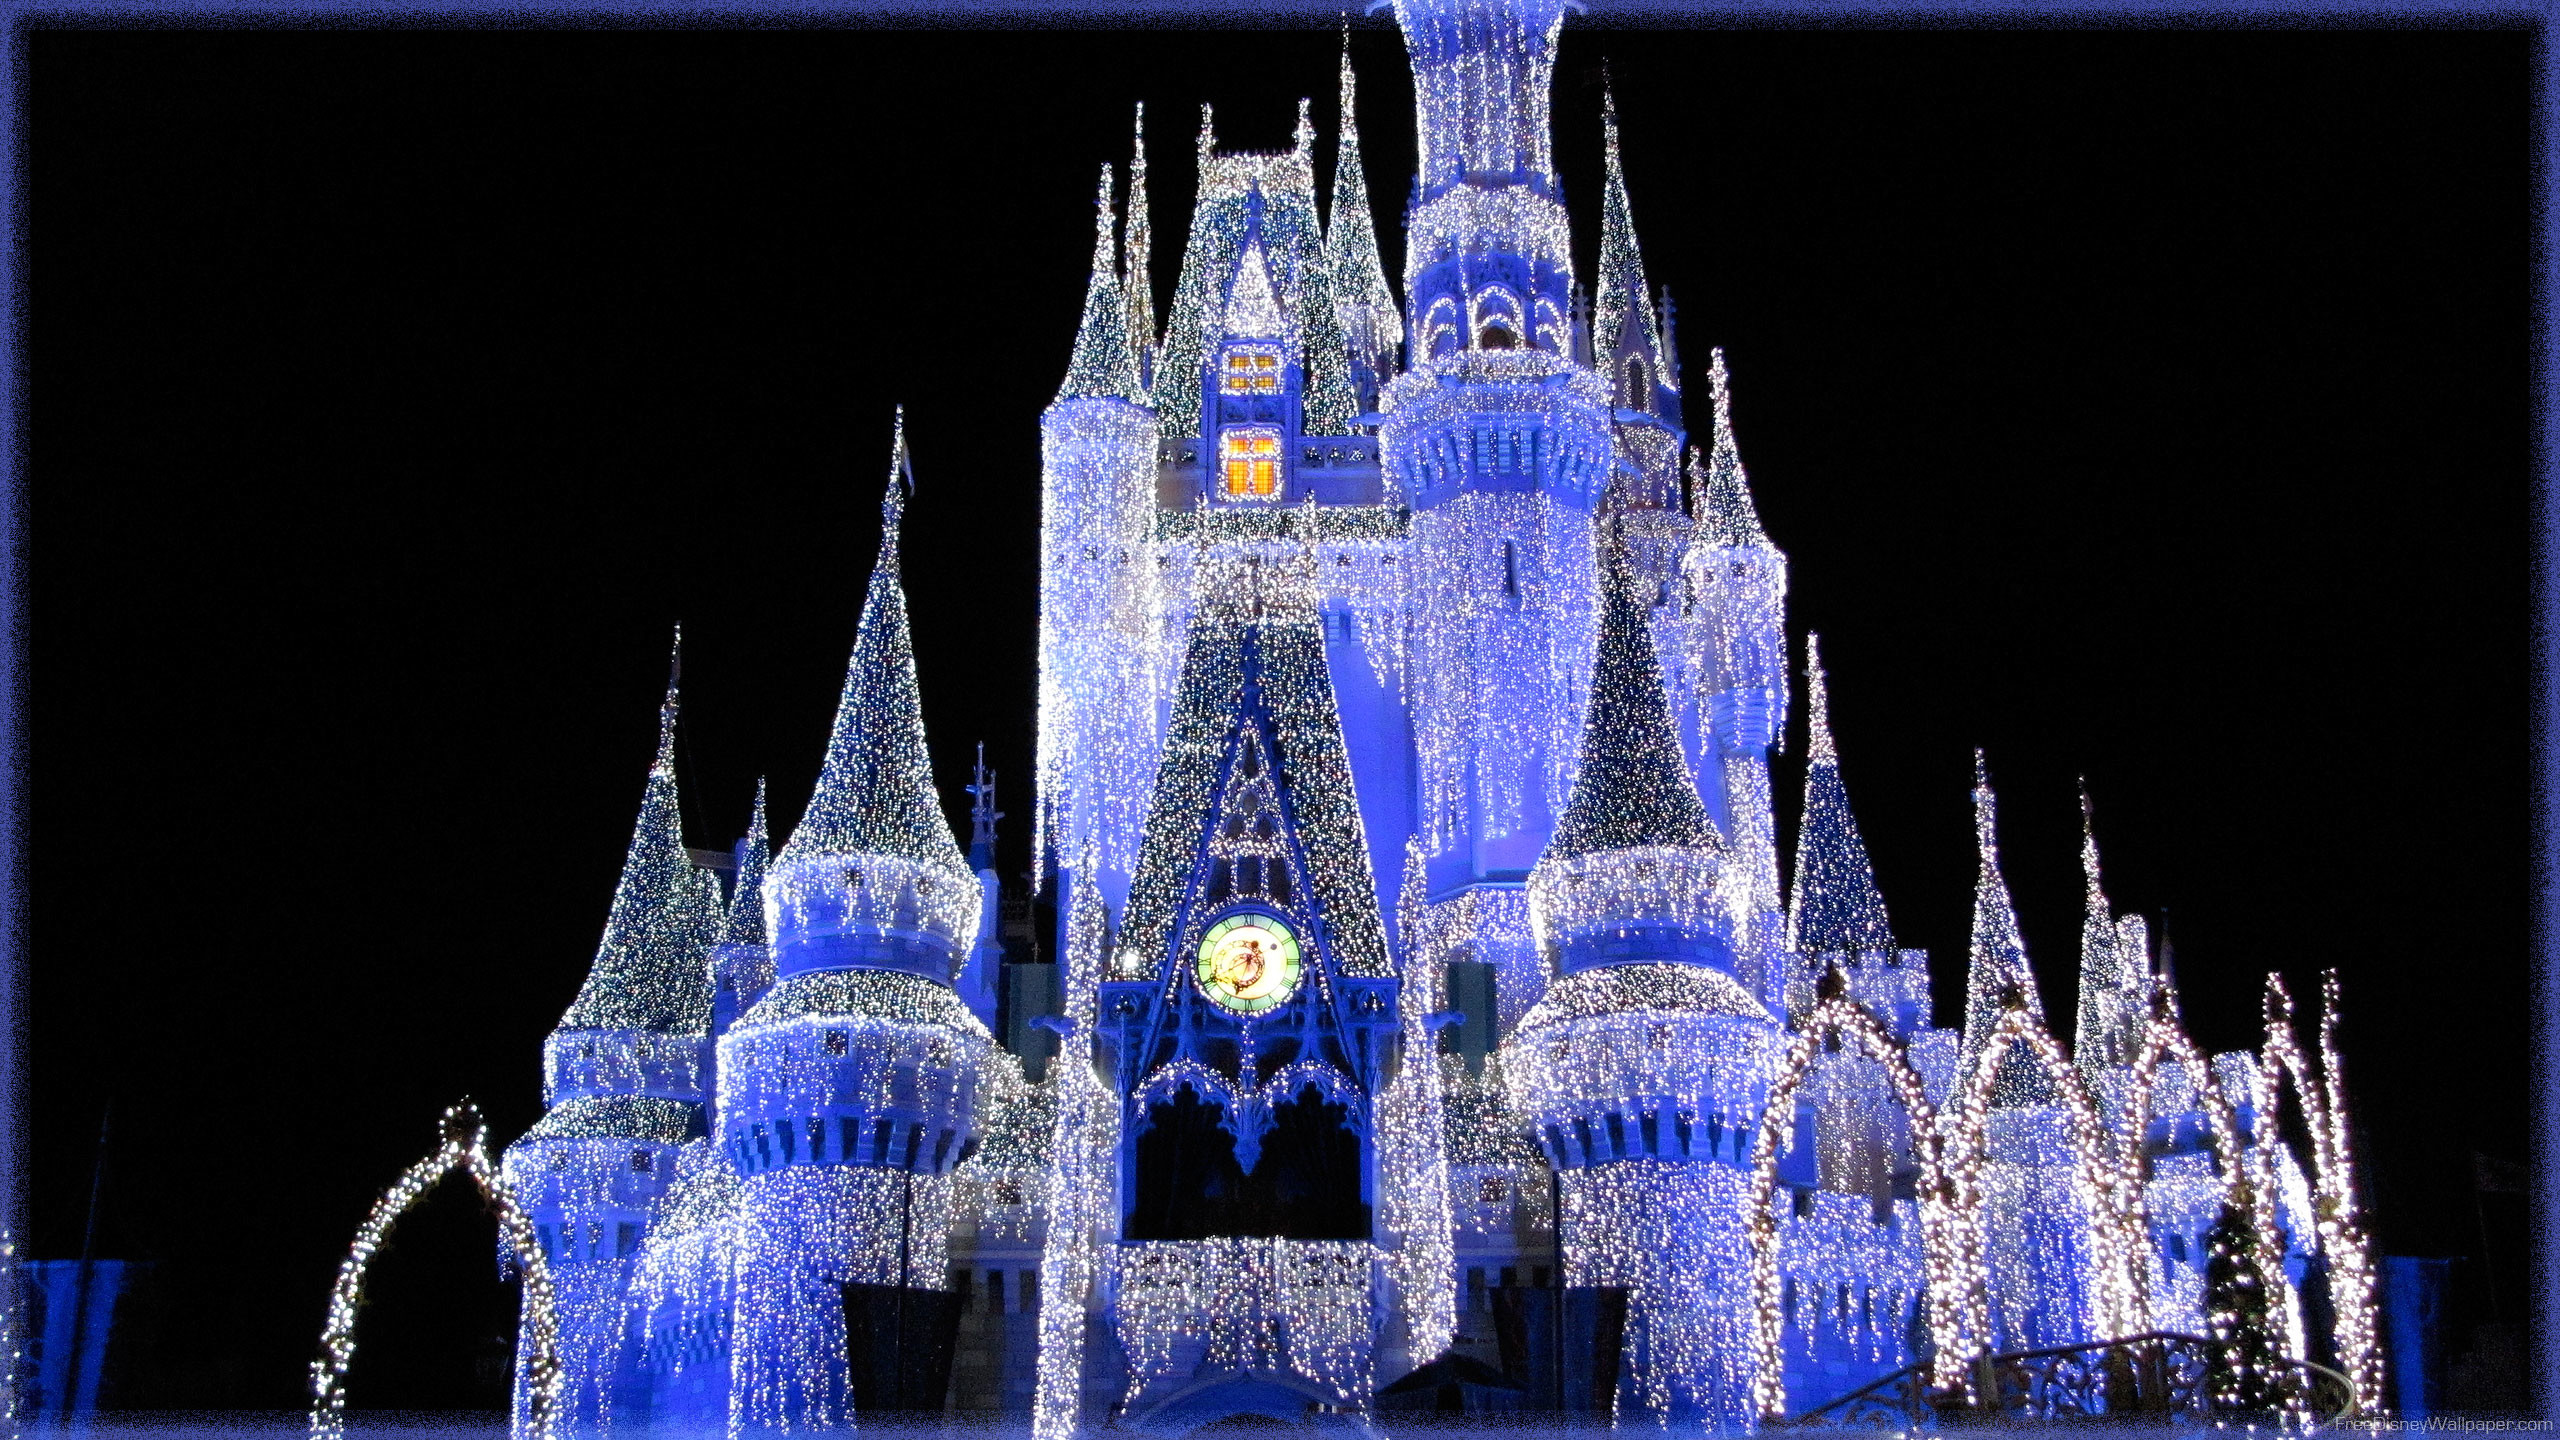 2560x1440 ... Disney Castle Wallpaper HD - WallpaperSafari ...